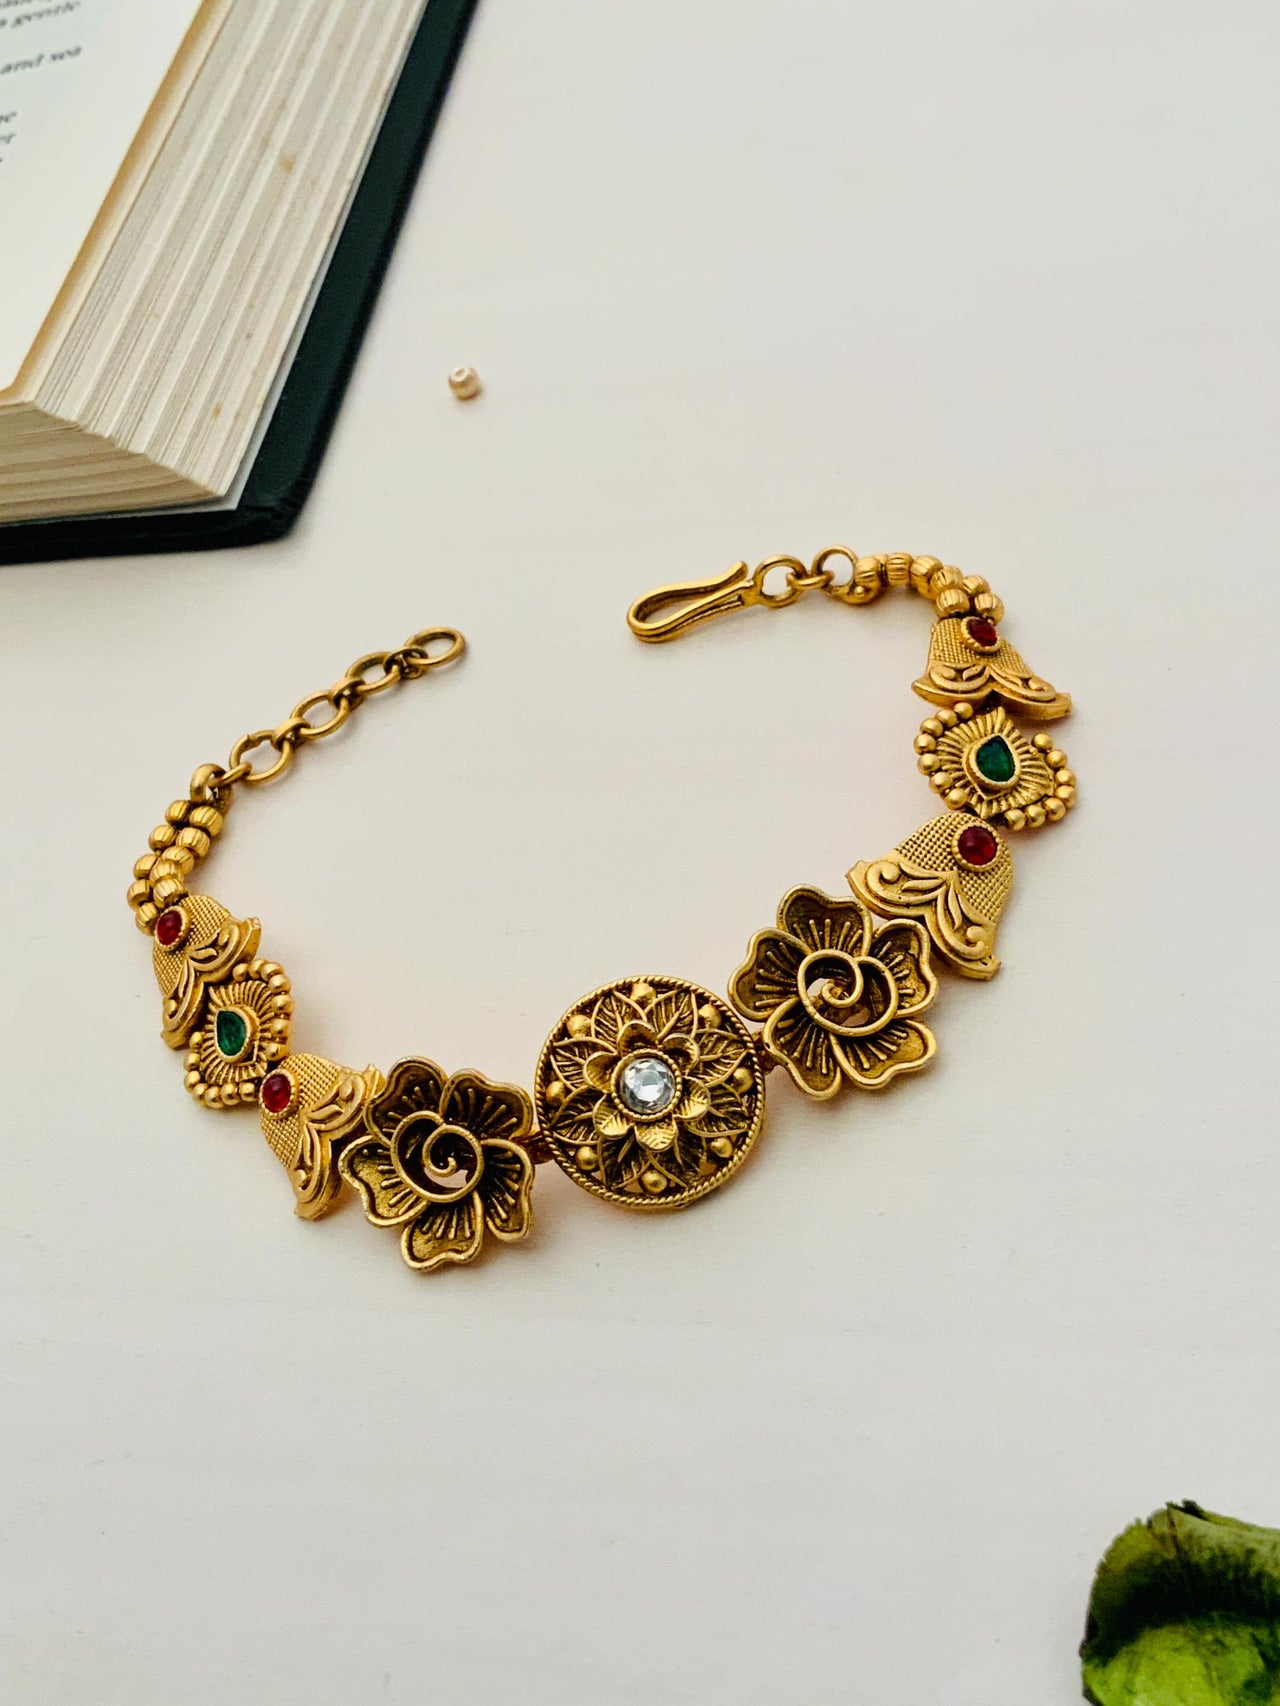 Exquisite Antique Matt Gold Polish Hand Bracelet - Abdesignsjewellery